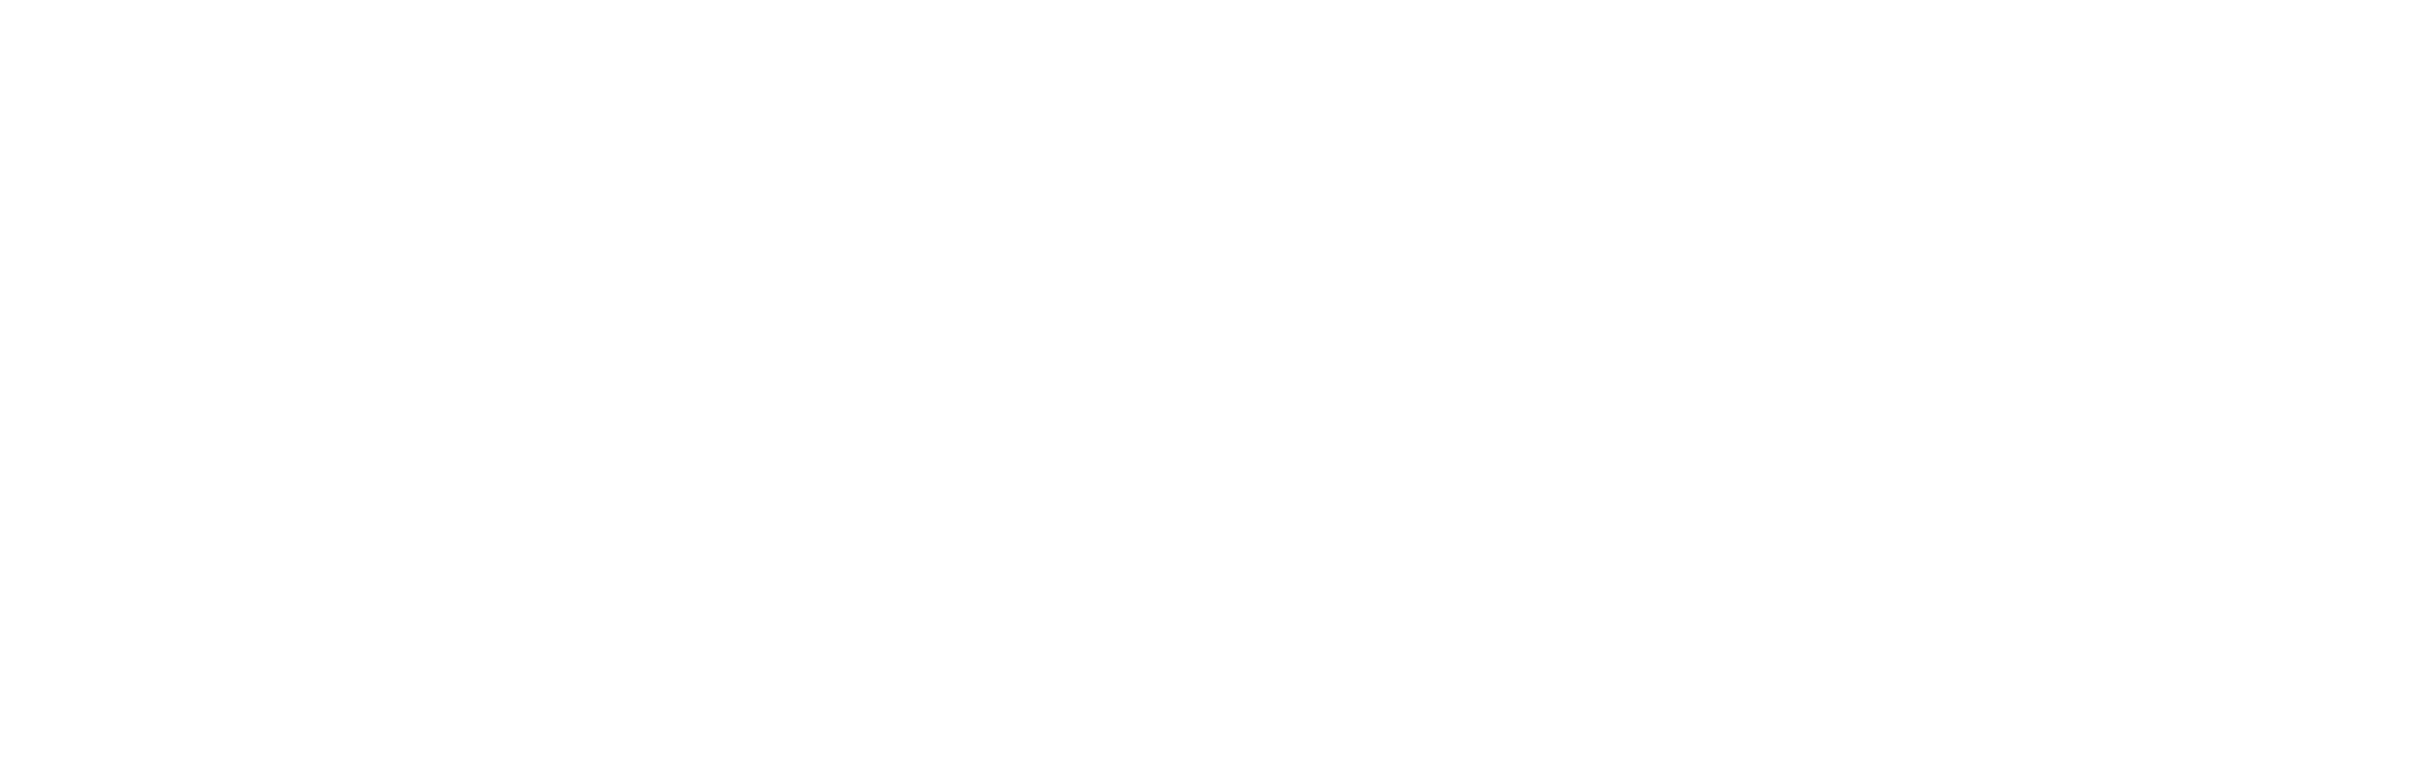 TudorMcleod-logo